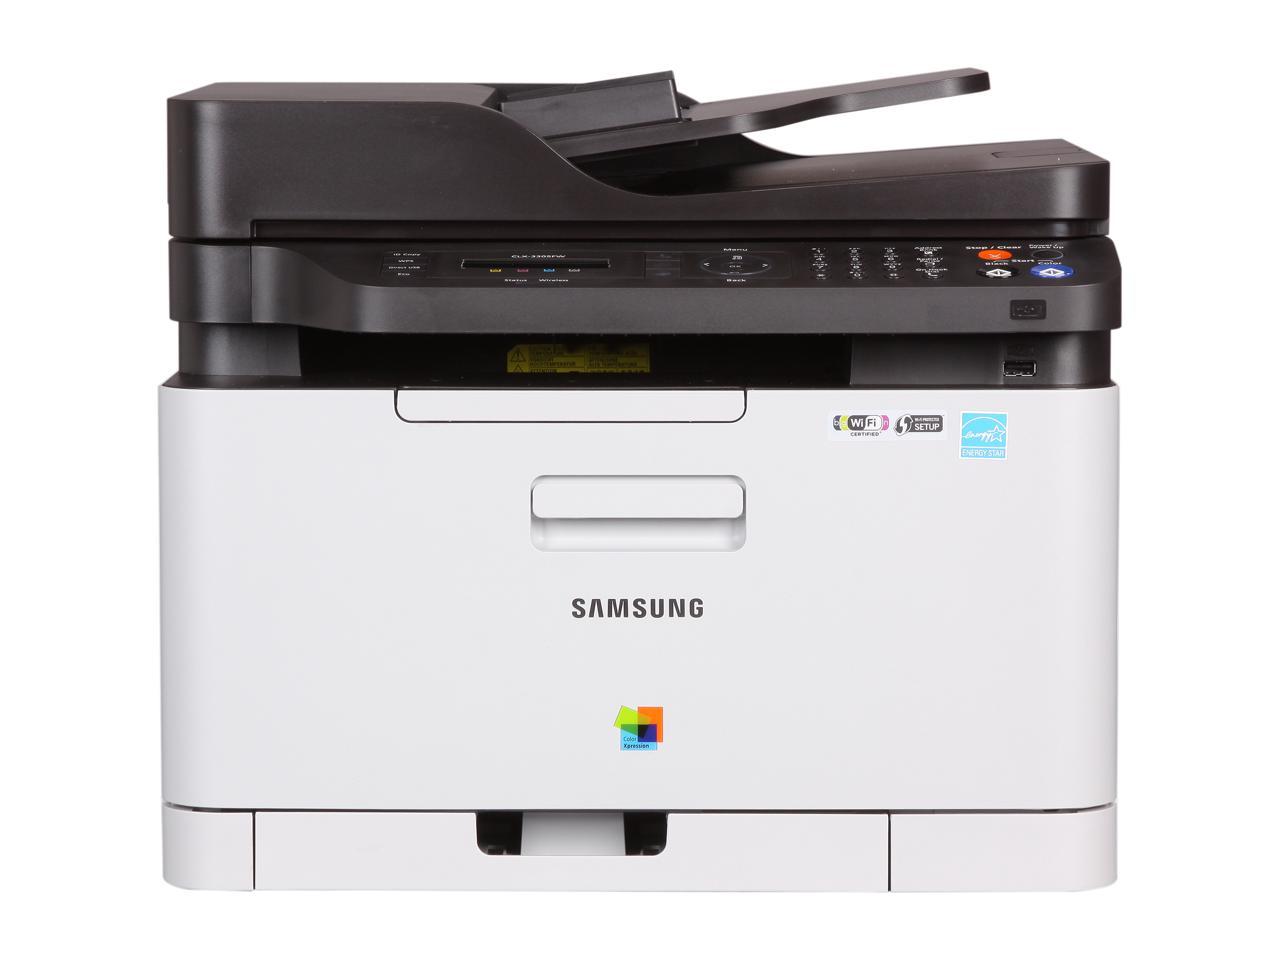 Samsung Clx Series Clx 3305fw Mfc All In One Color Wireless 802 11b G N Laser Printer Newegg Com